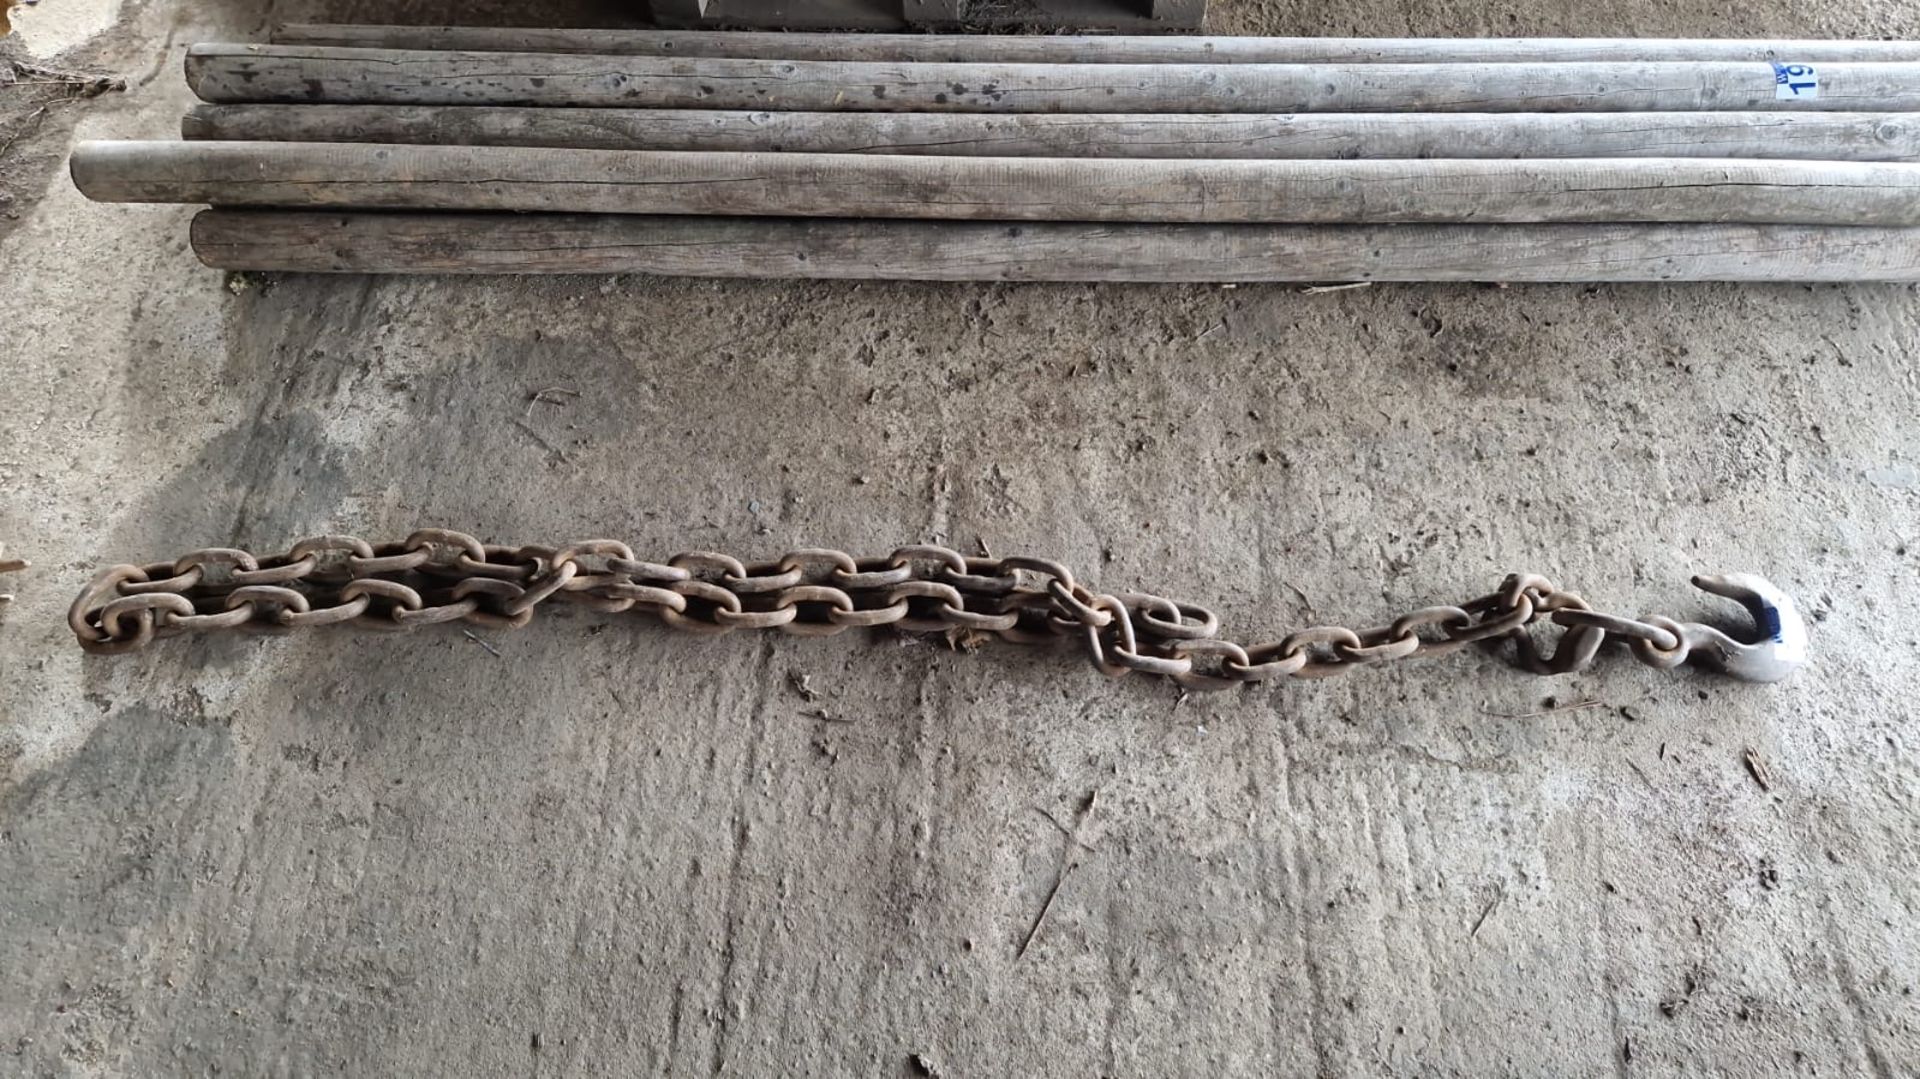 Steel tow chain